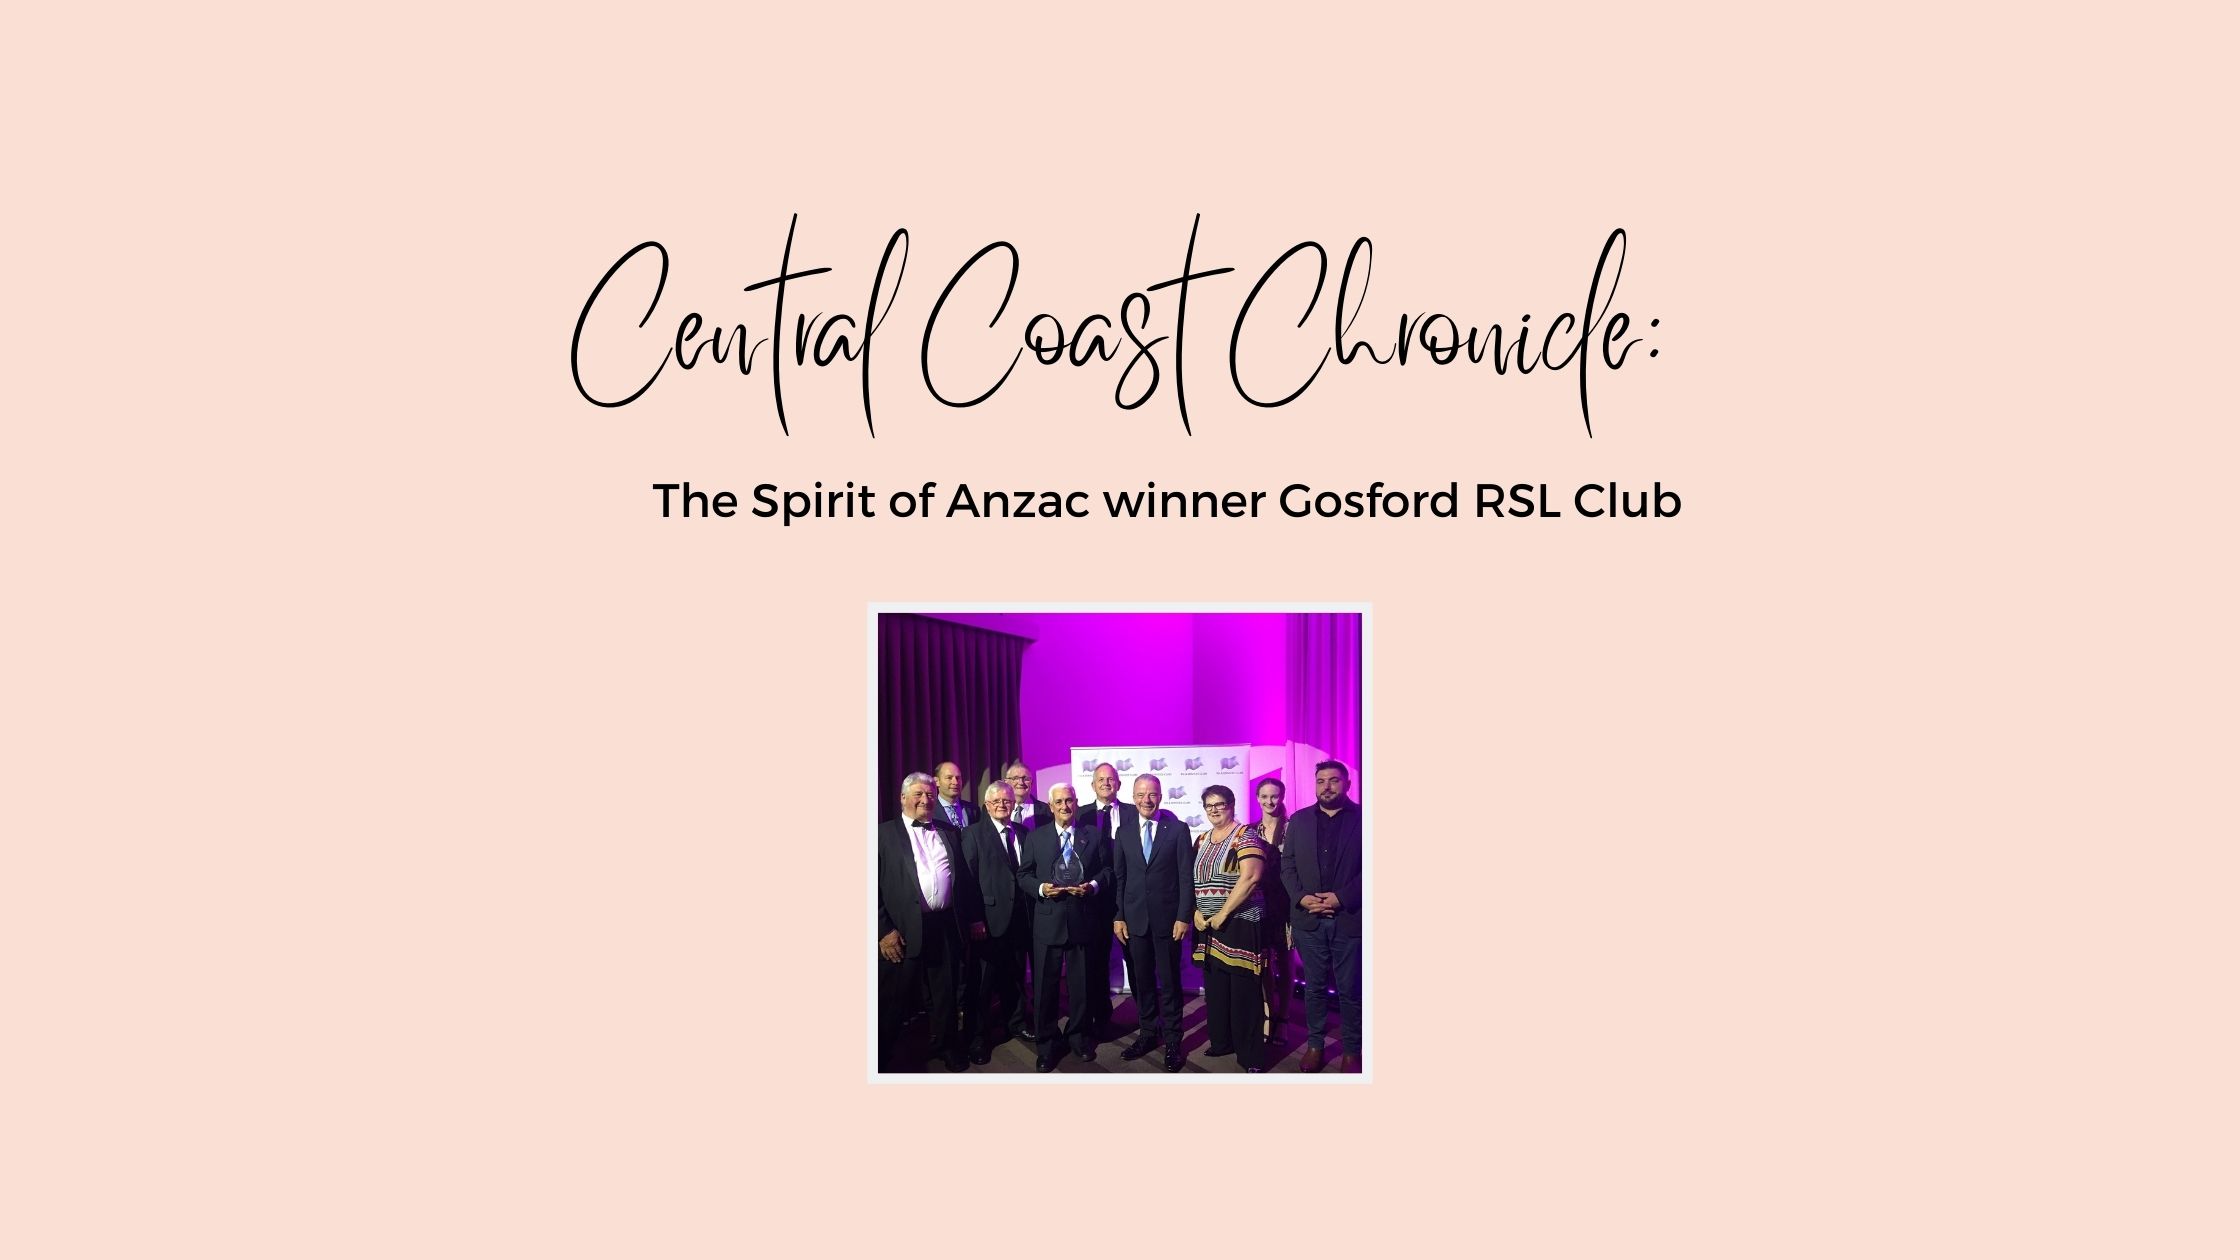 The Spirit of Anzac winner Gosford RSL Club